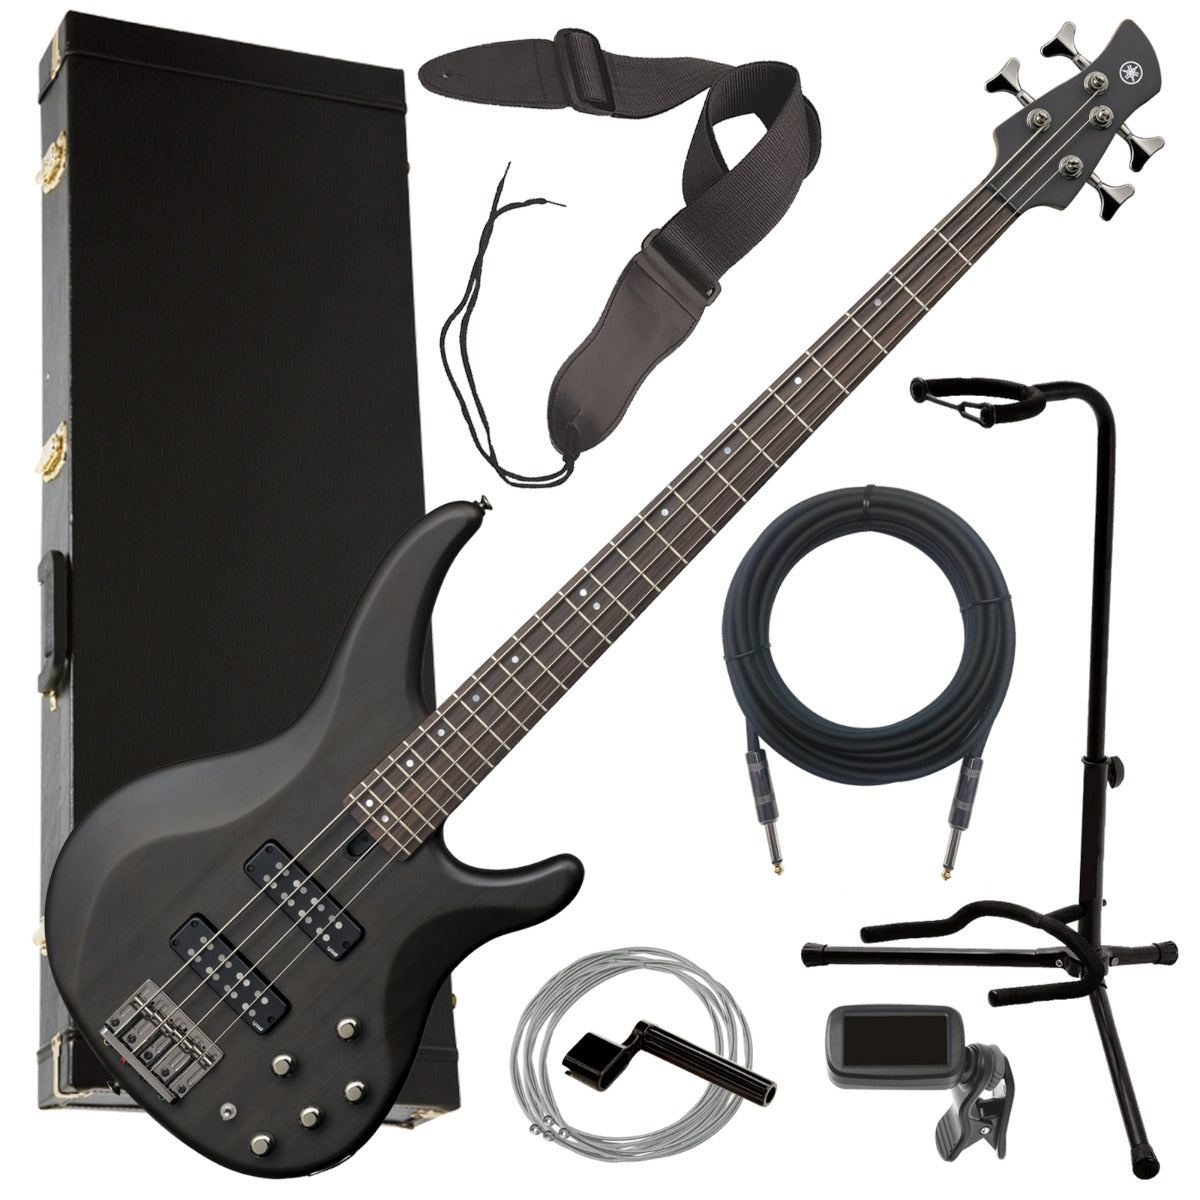 Yamaha TRBX504 4-String Bass Guitar - Translucent Black COMPLETE 